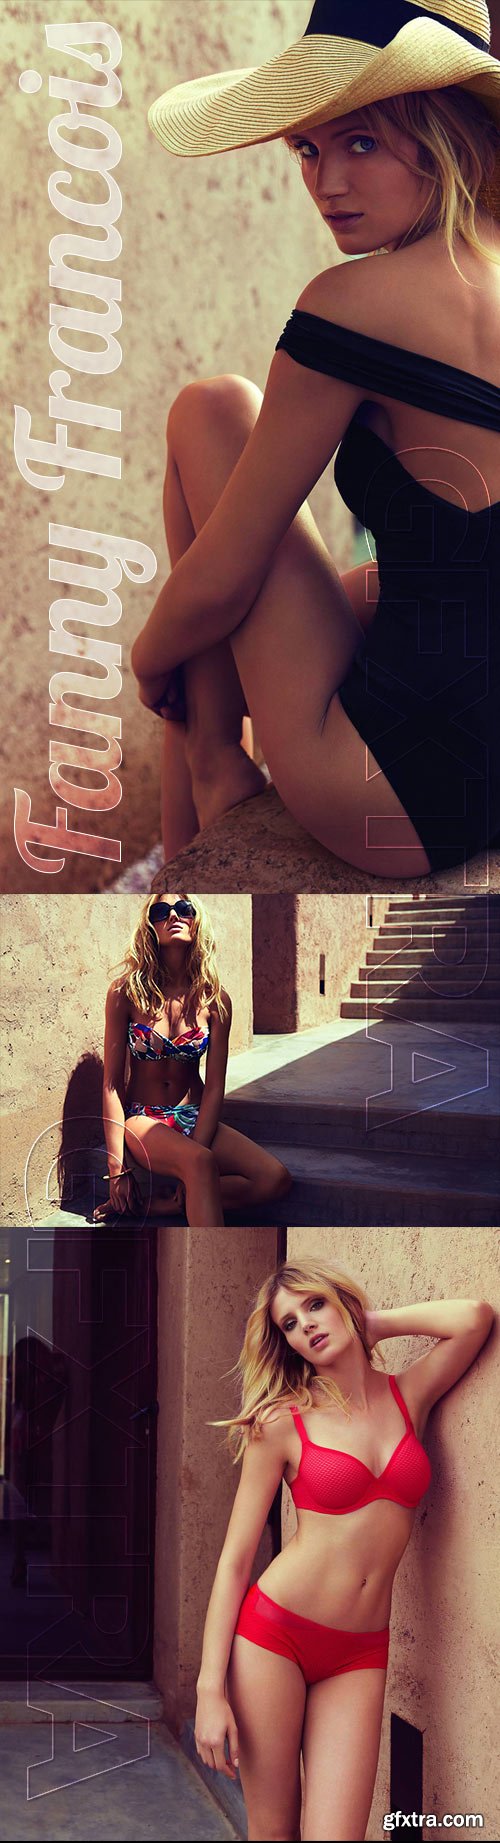 Fanny Francois - Bikini and Lingerie Photoshoot